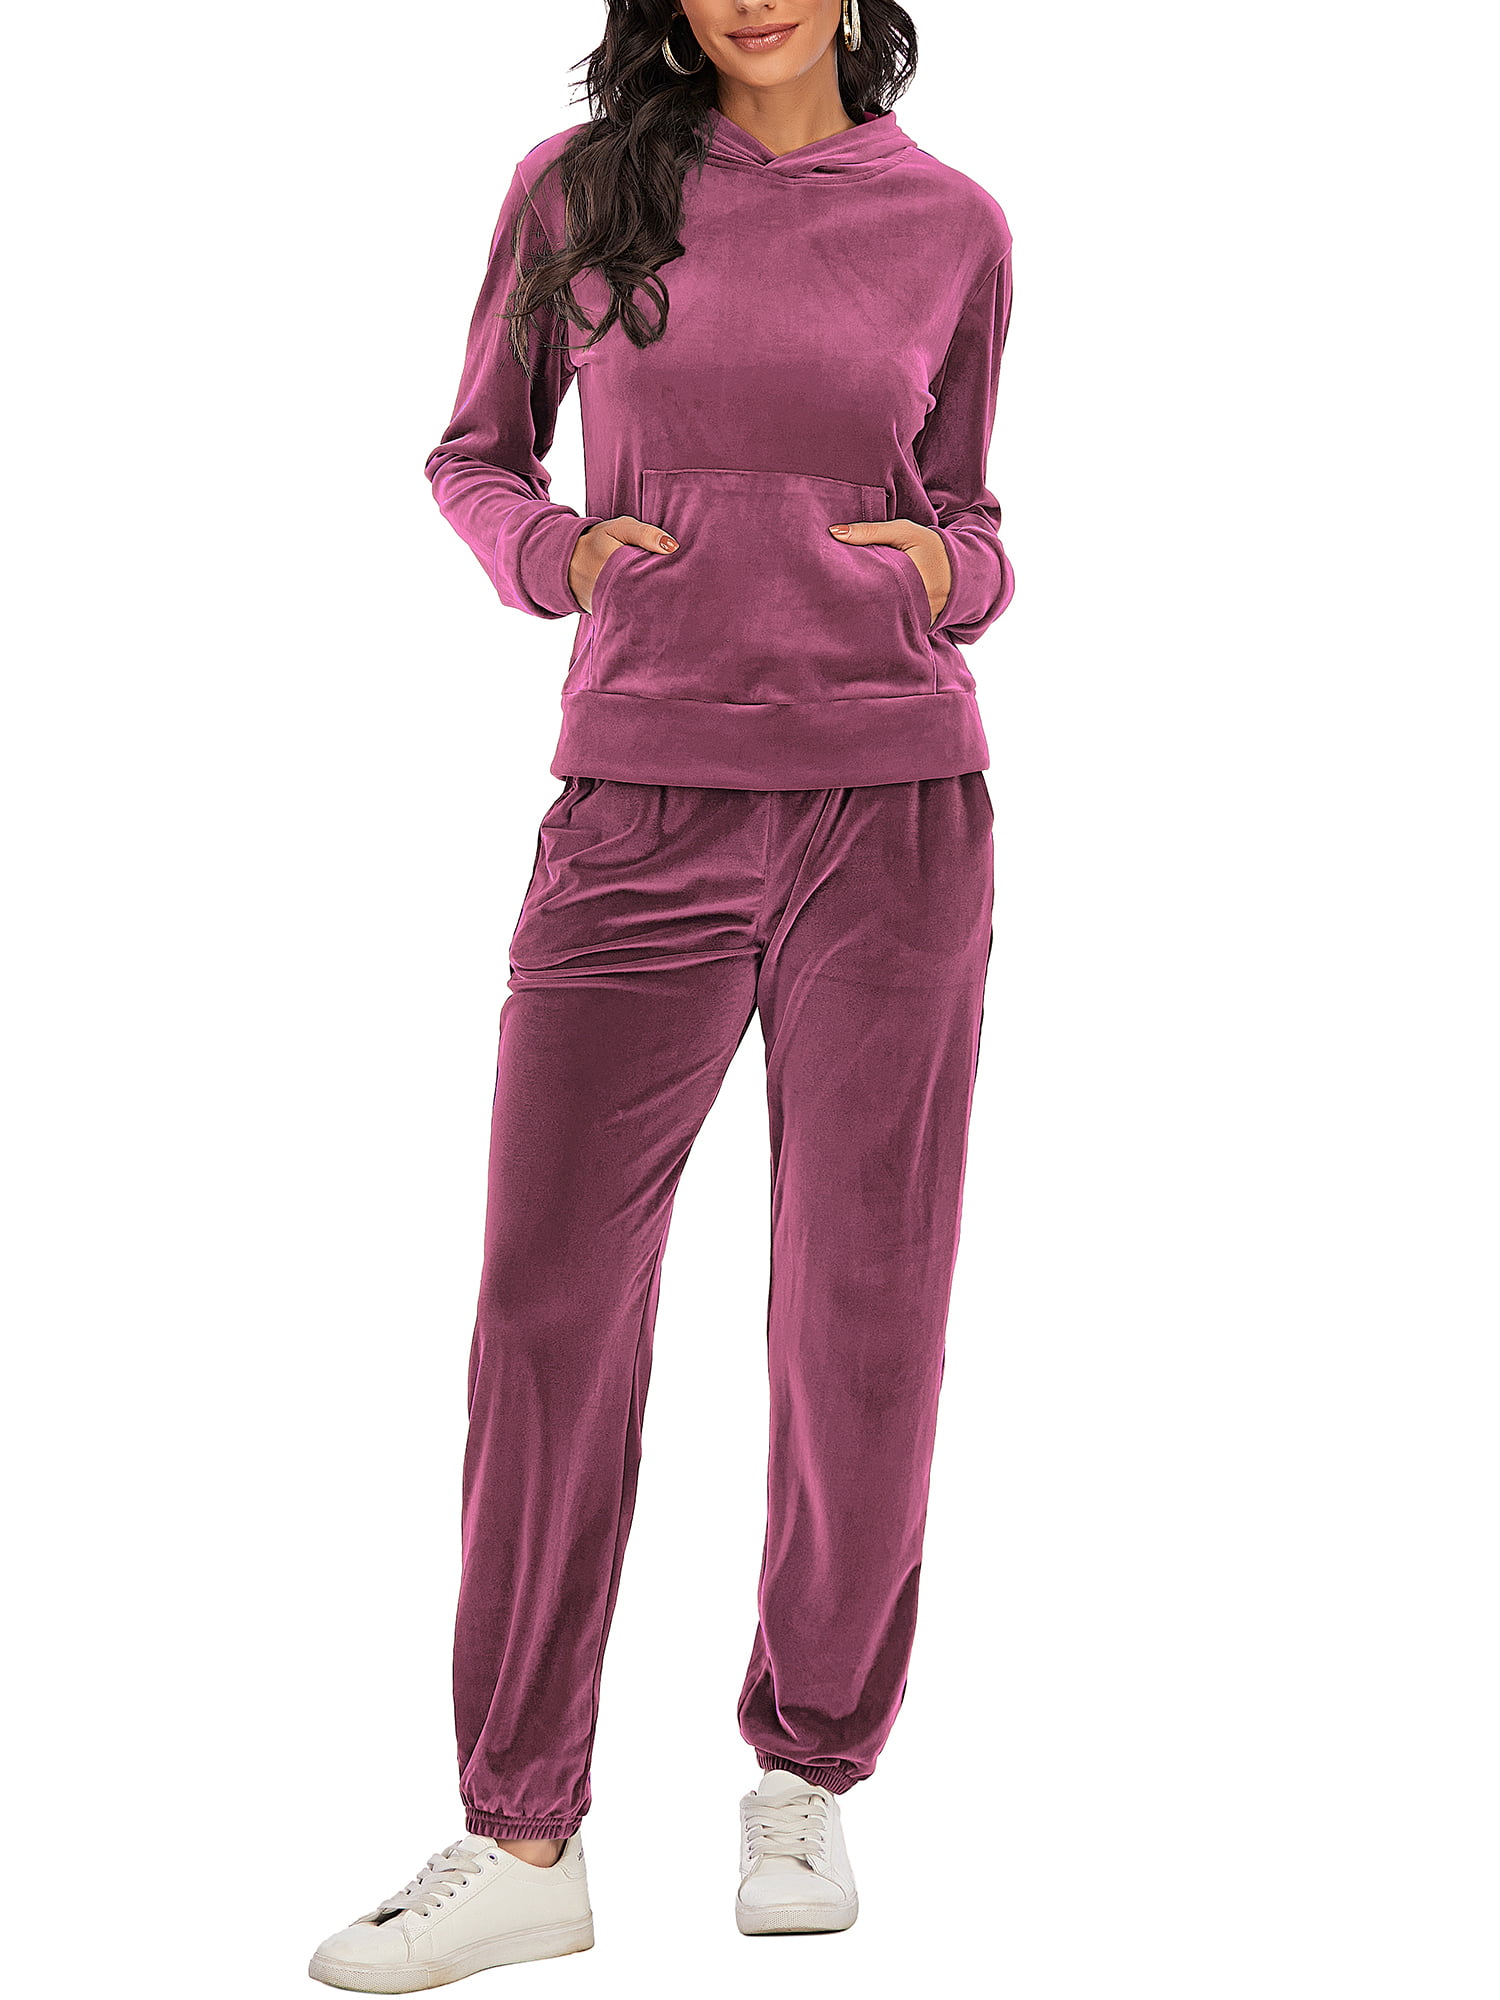 Velvet Leggings and Oversized Hoodie Matching Set Velour Co Ord Set Leisure  Wear Women's Loungewear 